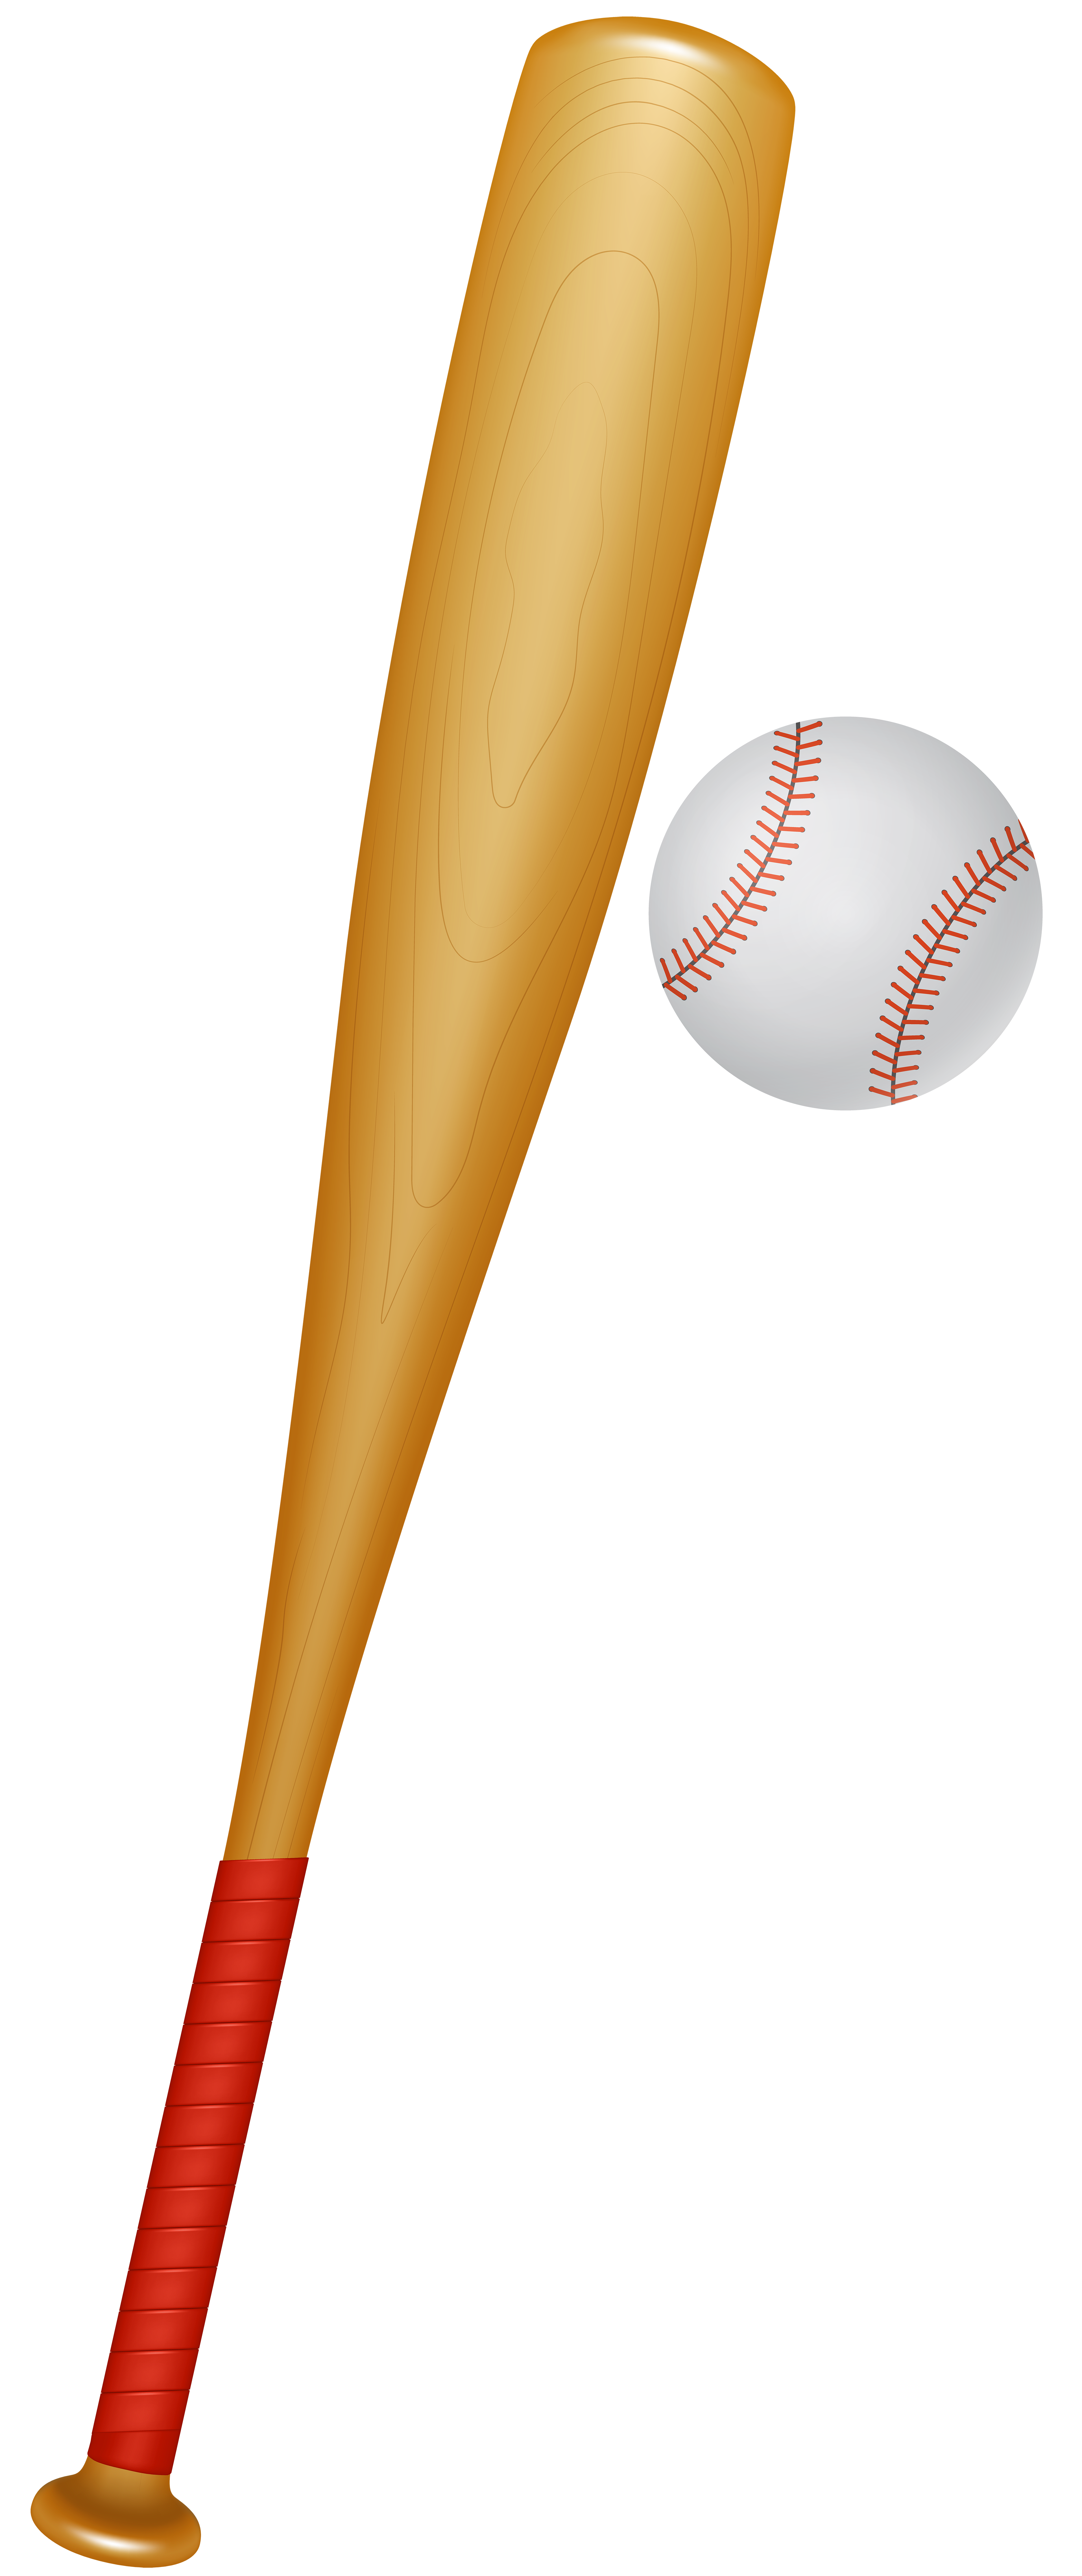 clipart baseball